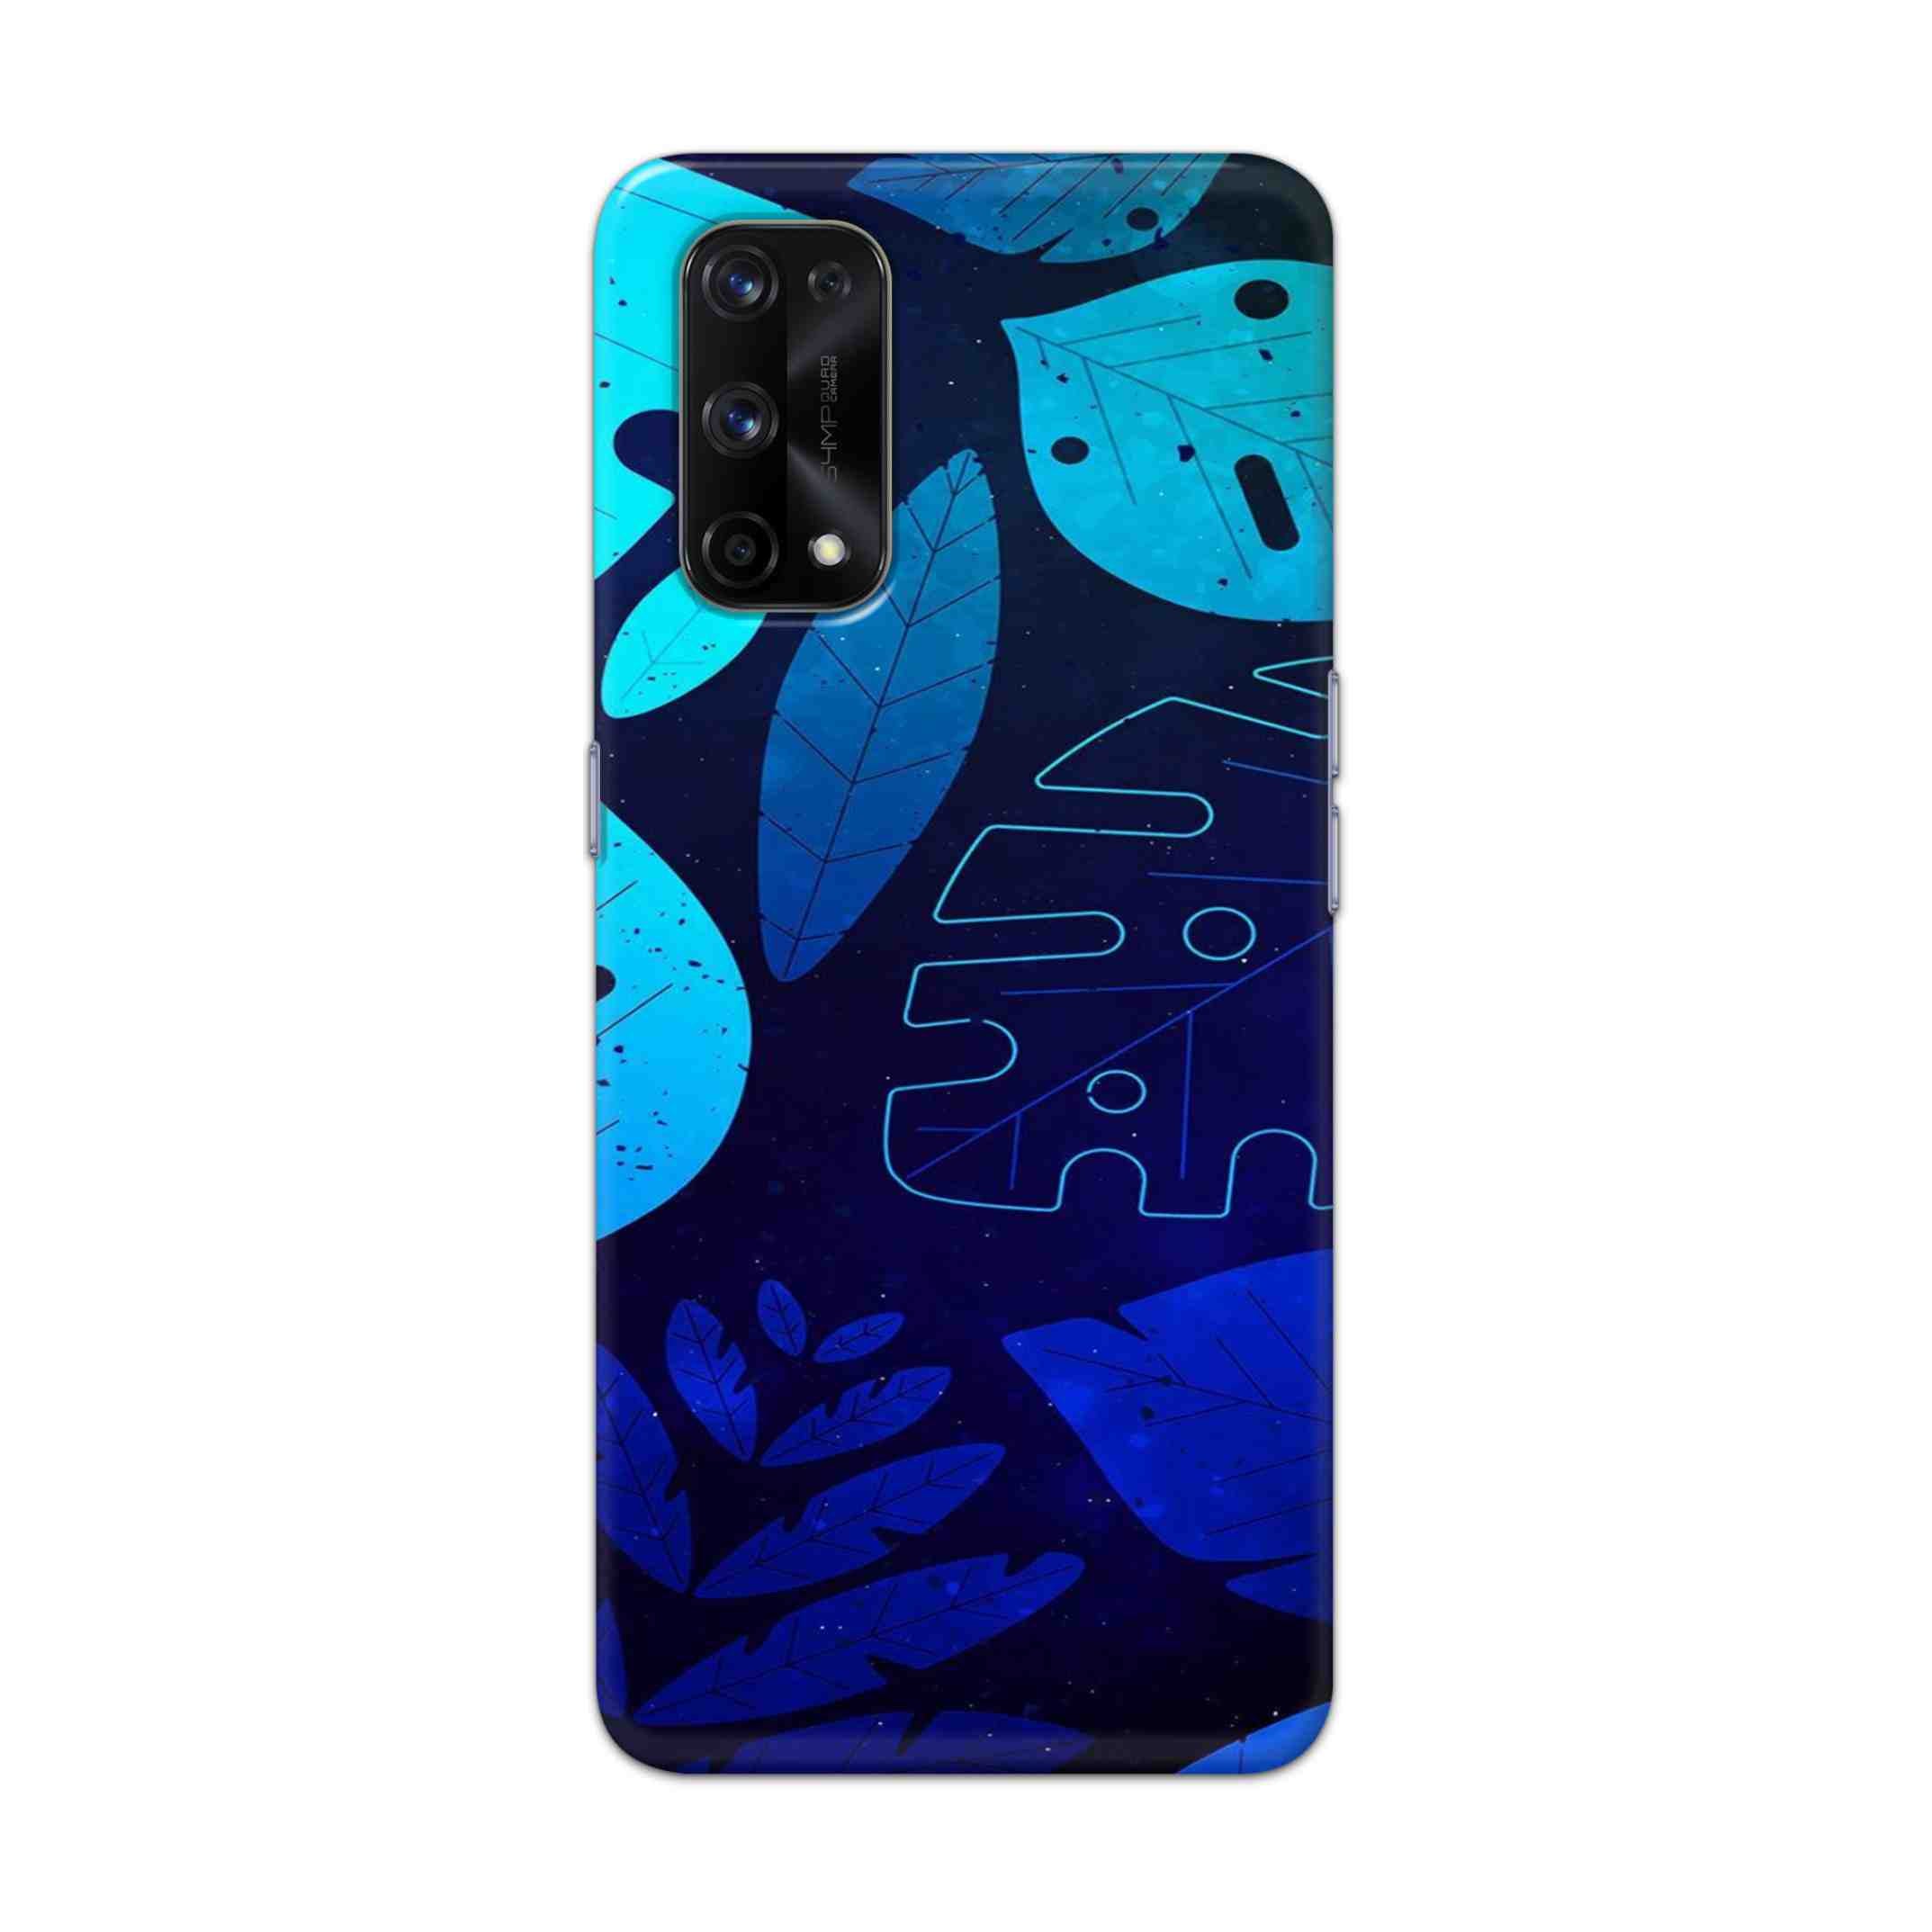 Buy Neon Leaf Hard Back Mobile Phone Case Cover For Realme X7 Pro Online